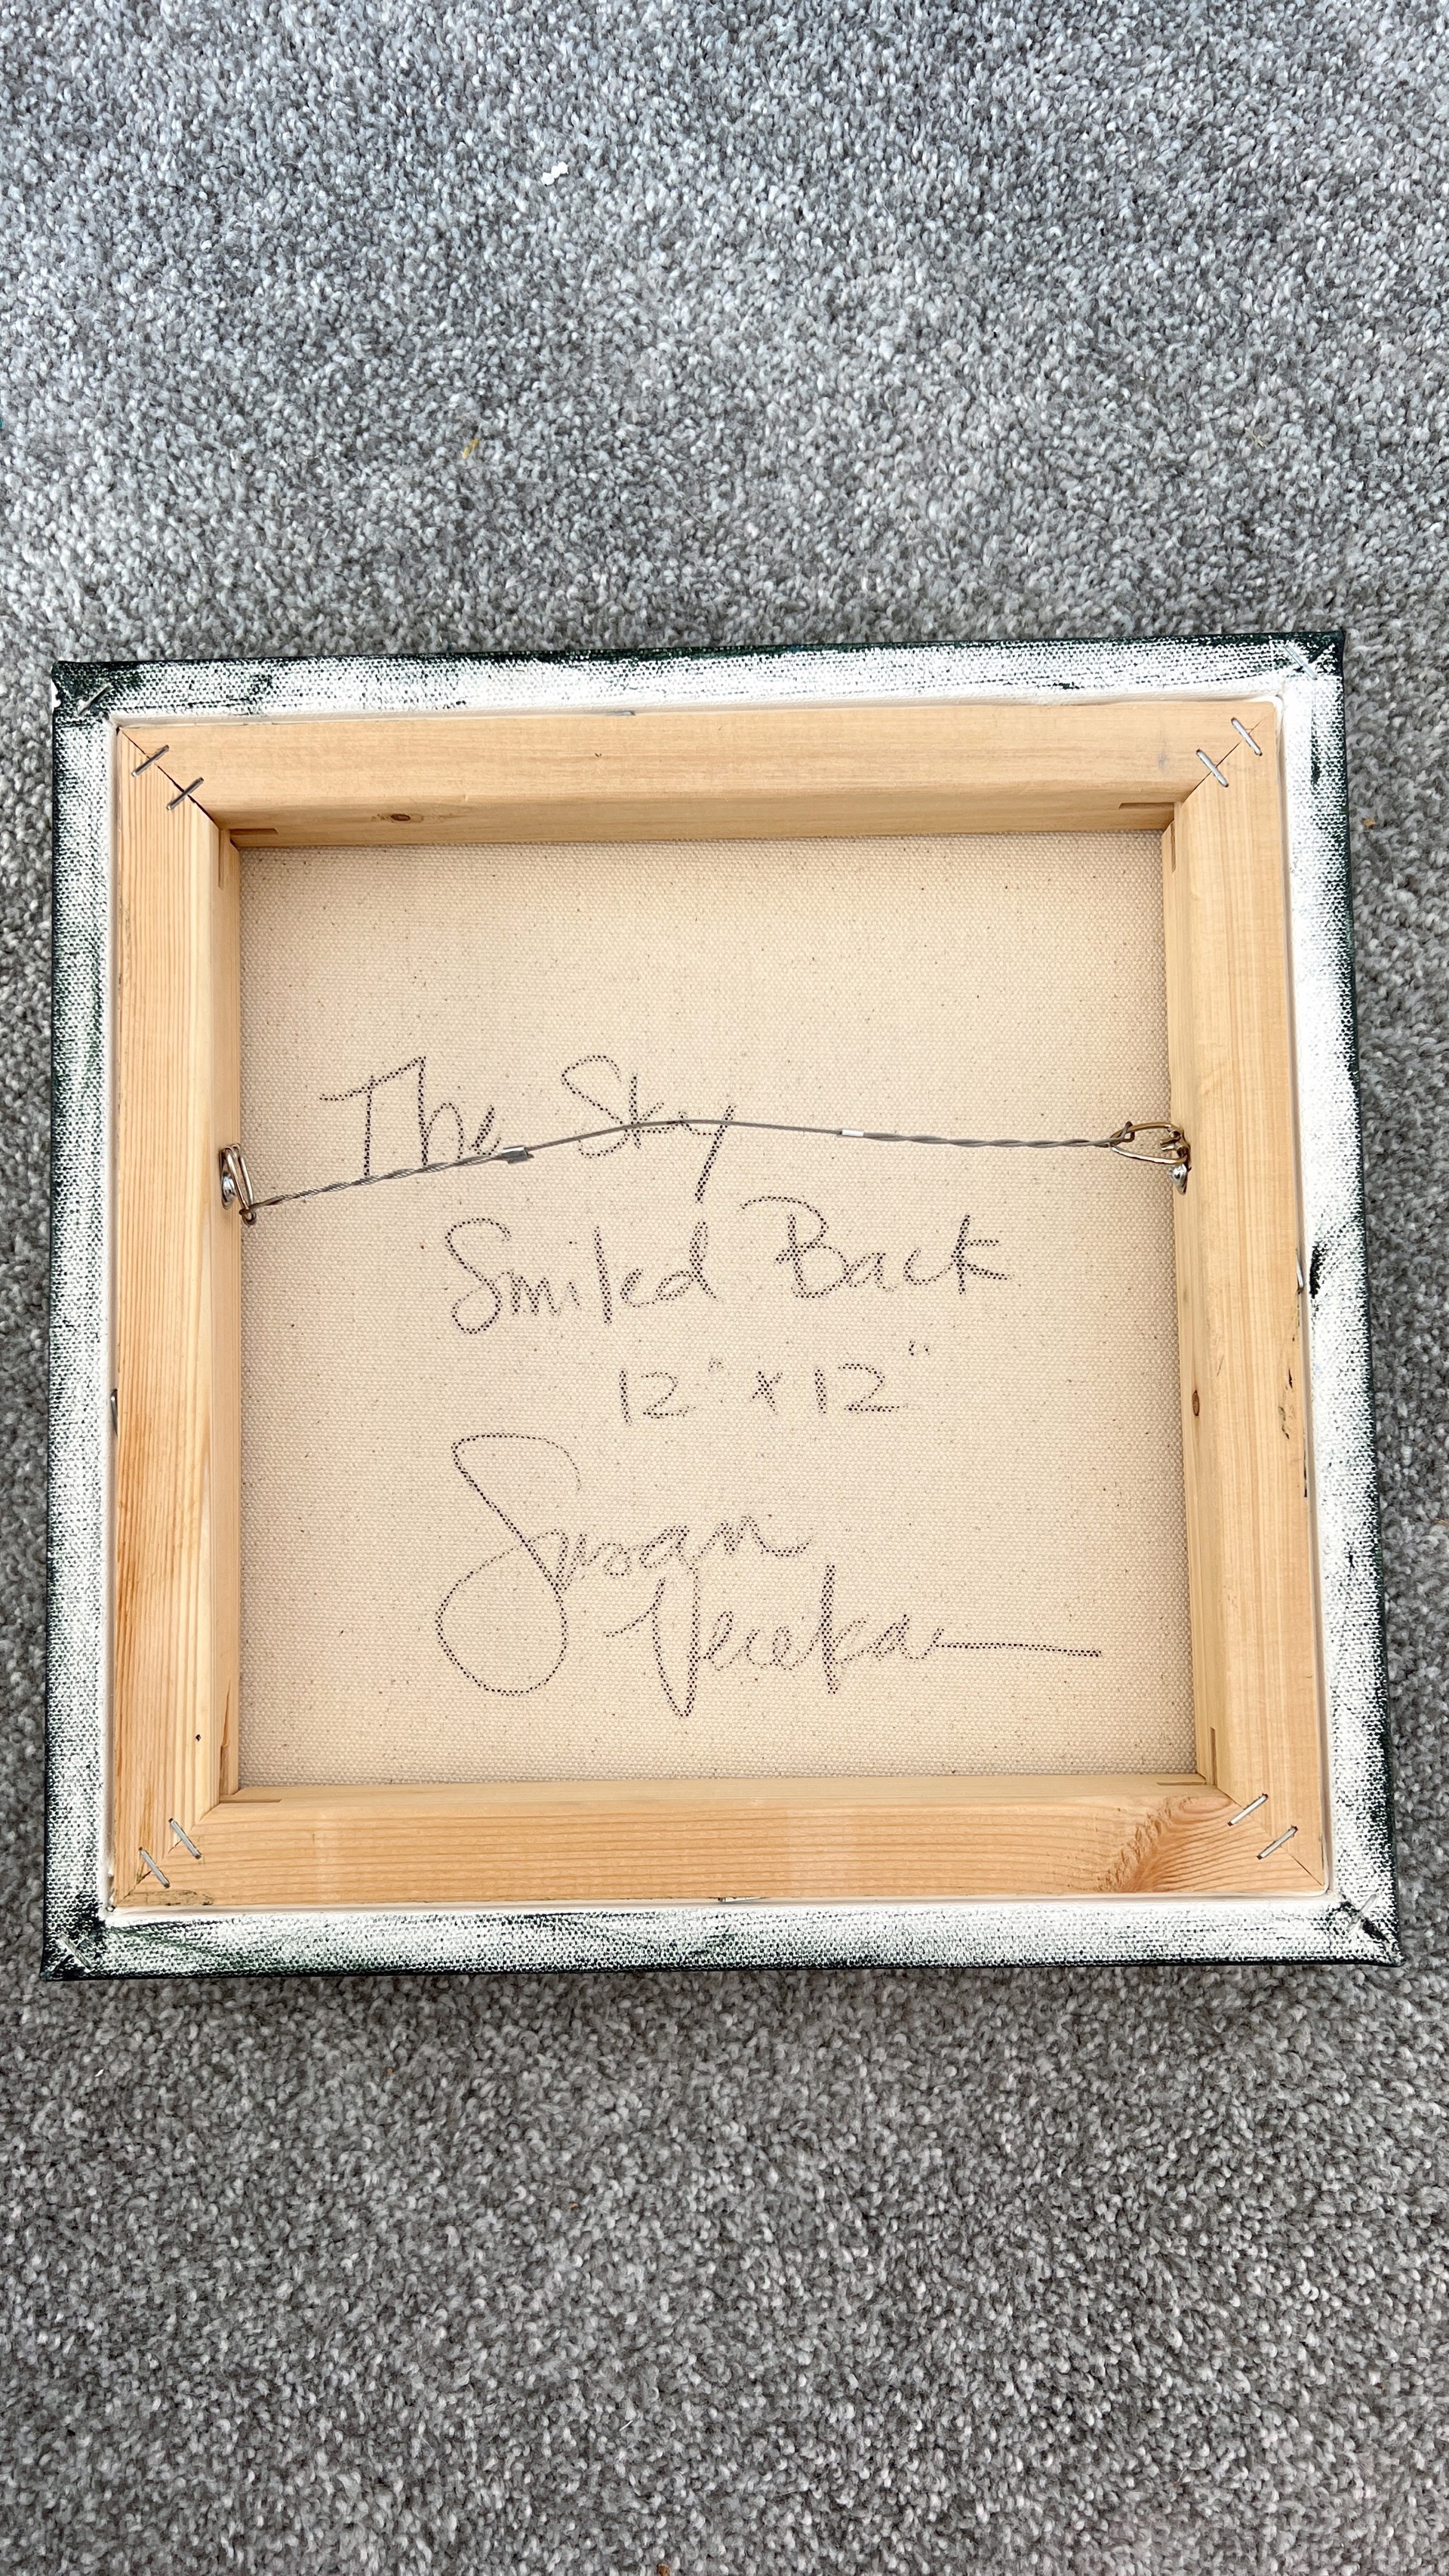 The Sky Smiled Back by Susan Verekar